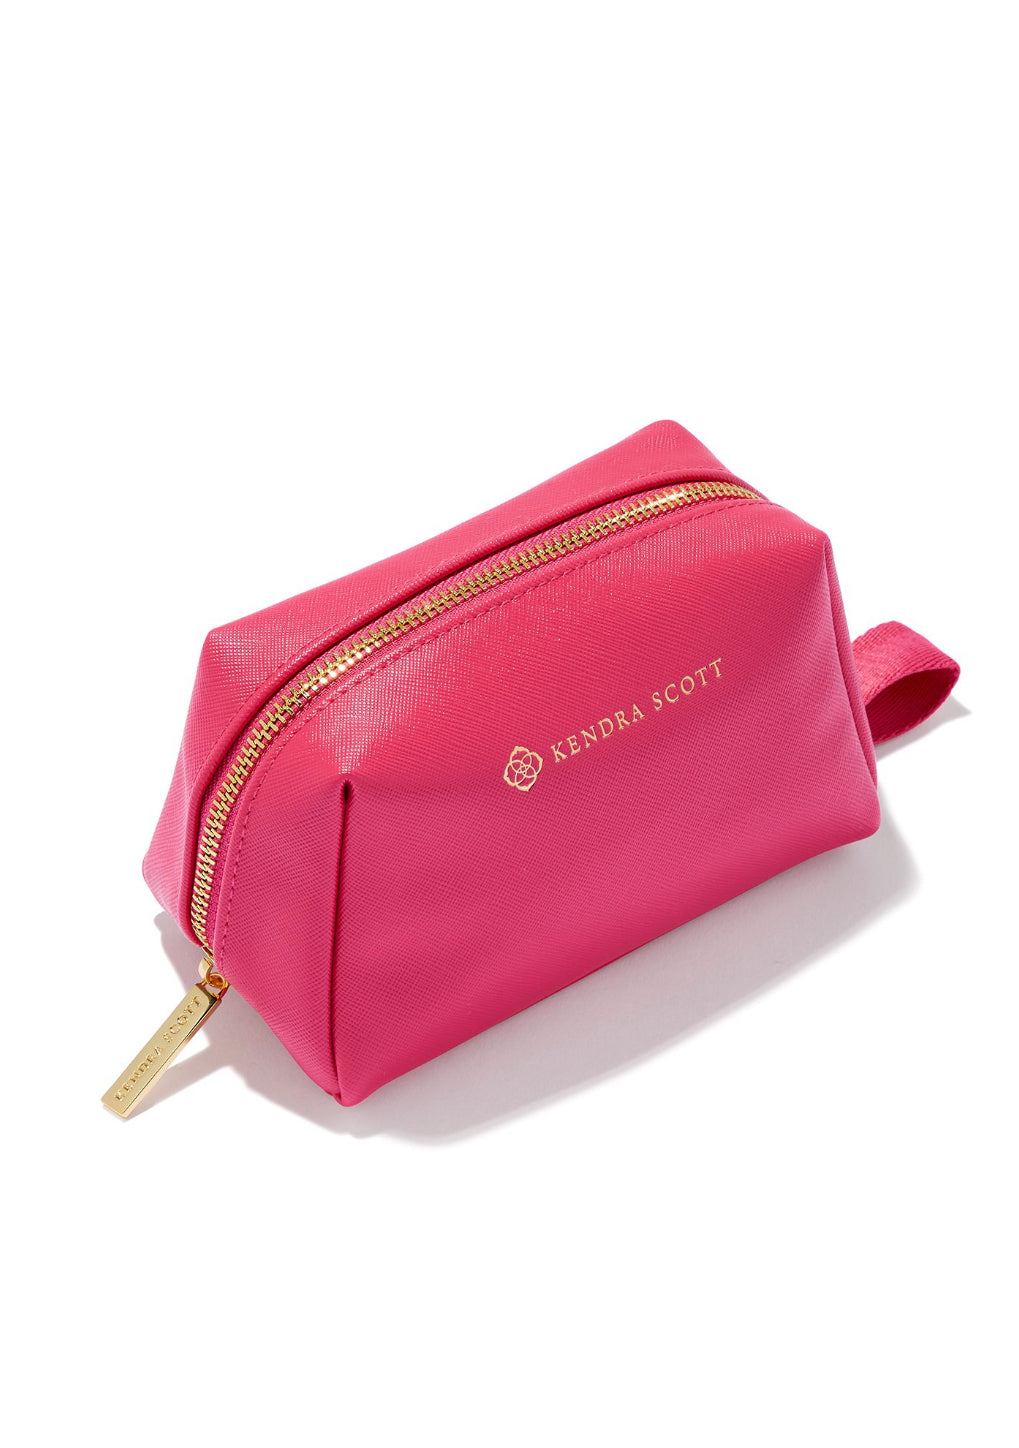 Kendra Scott: Small Cosmetic Zip Case in Hot Pink